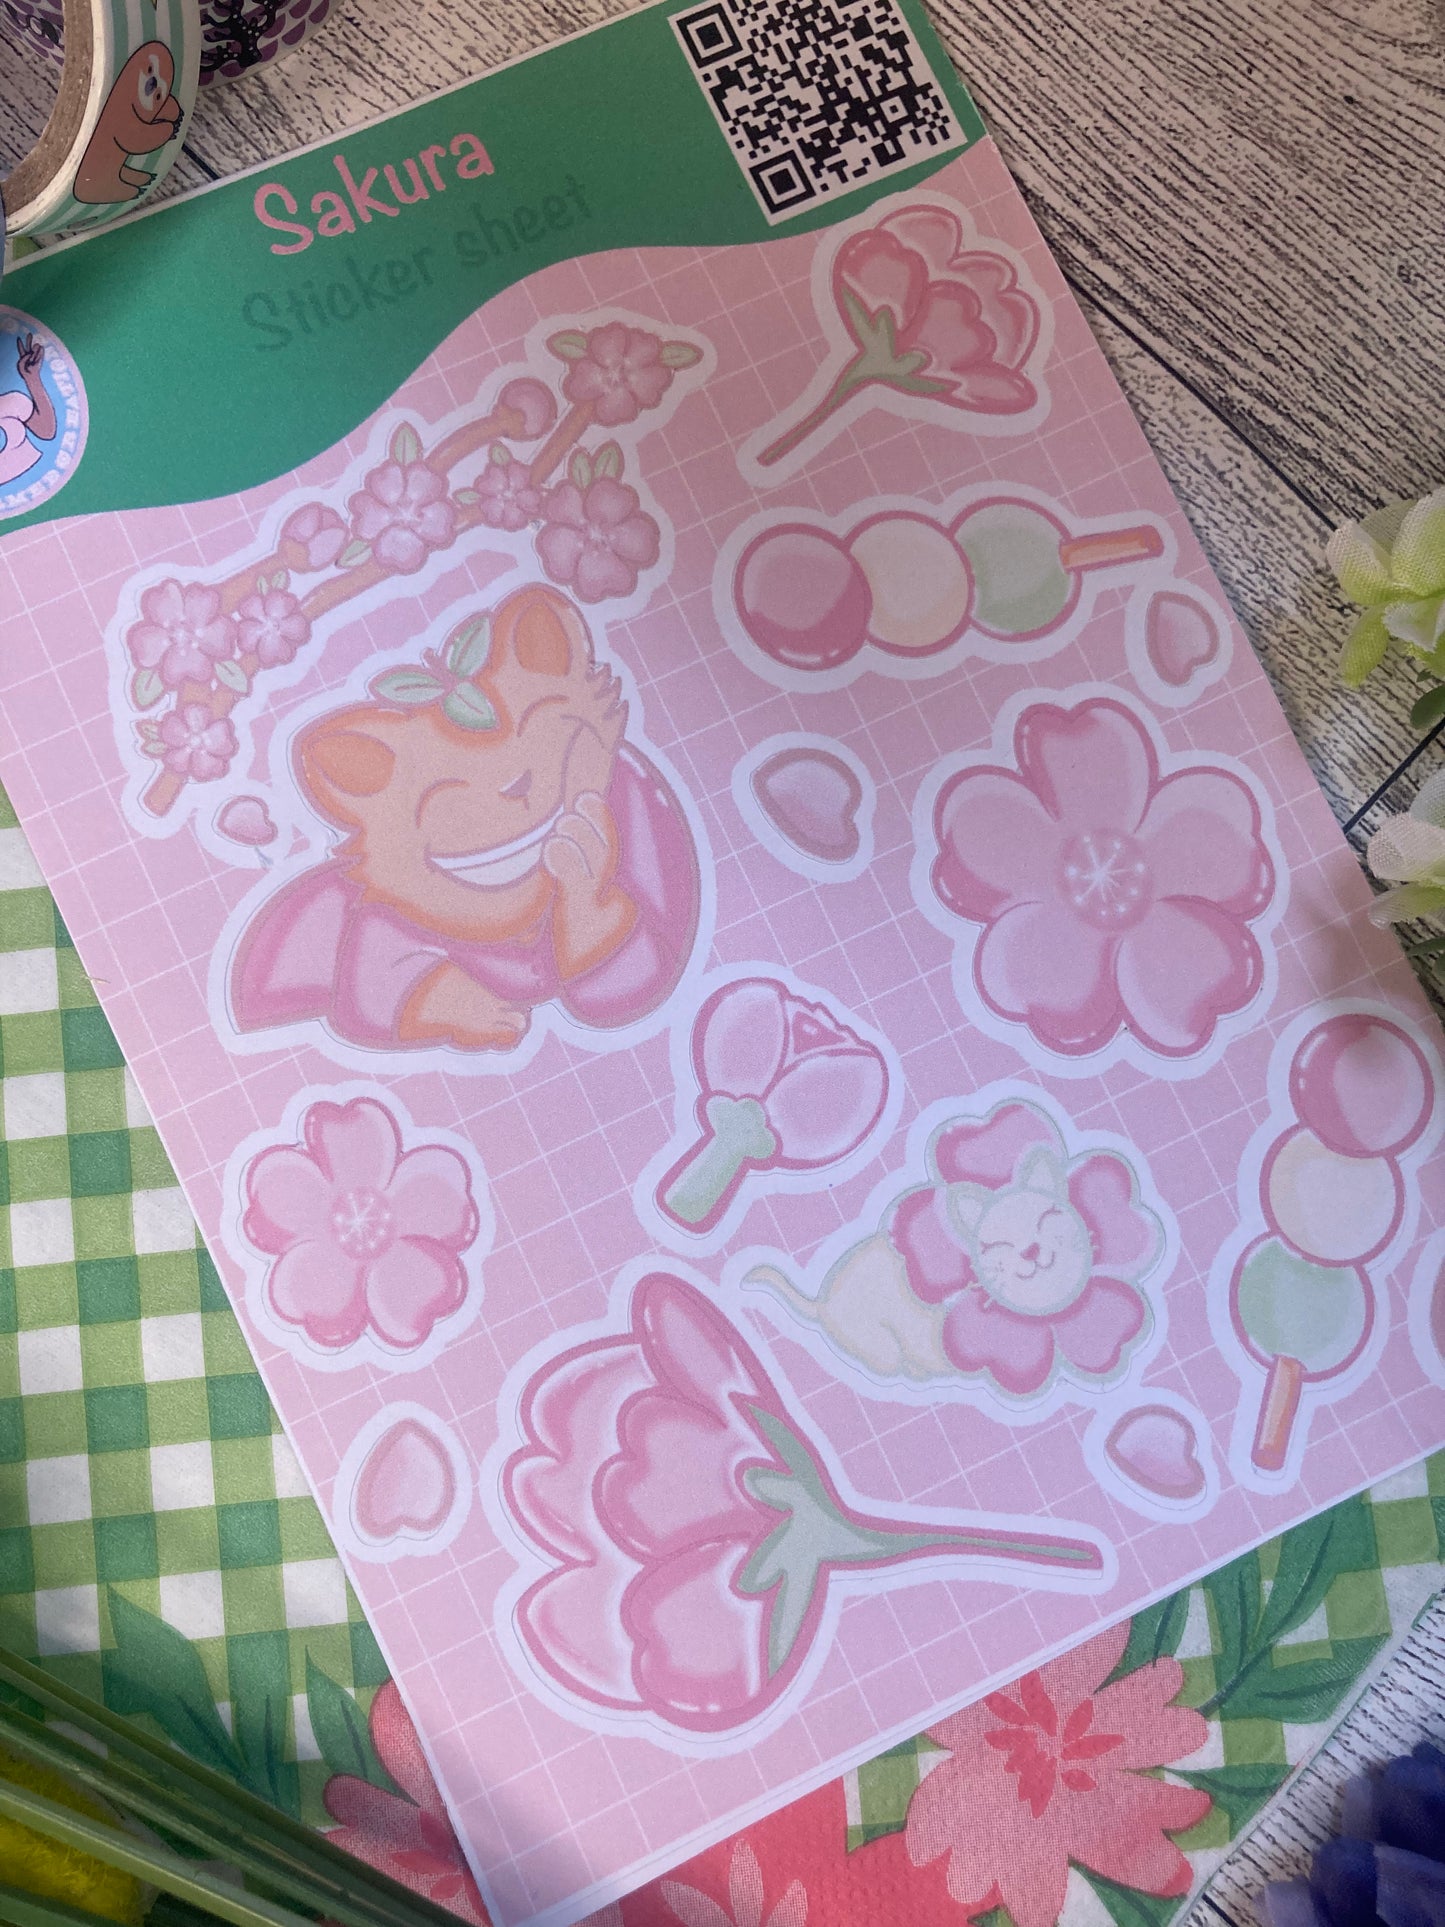 Copy Sakura Bear Sticker Sheet